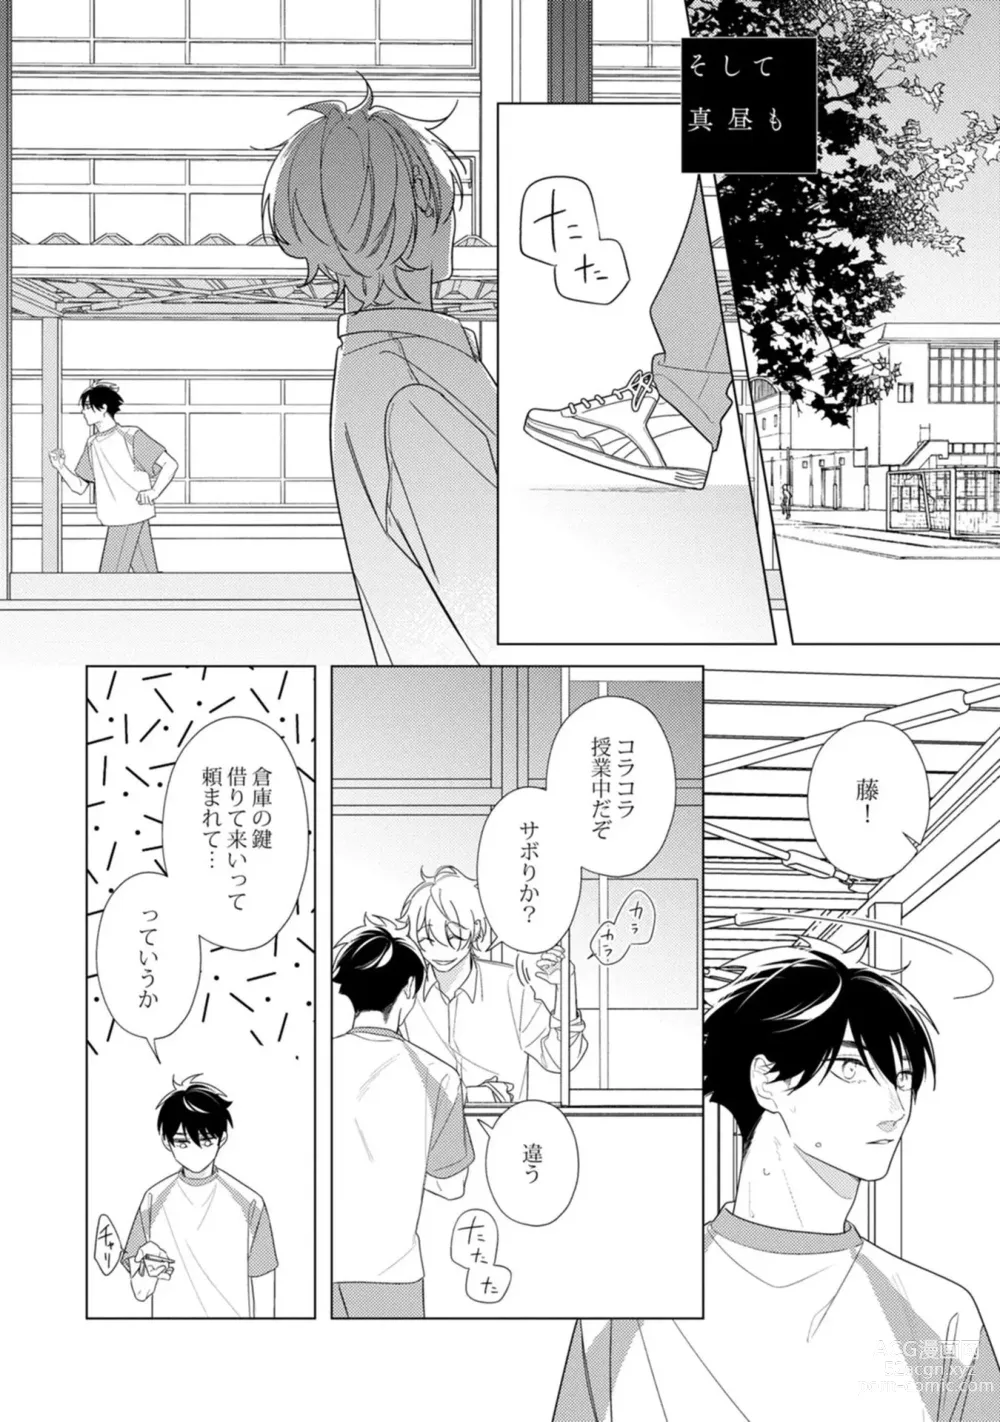 Page 167 of manga Yoru mo, Asa mo